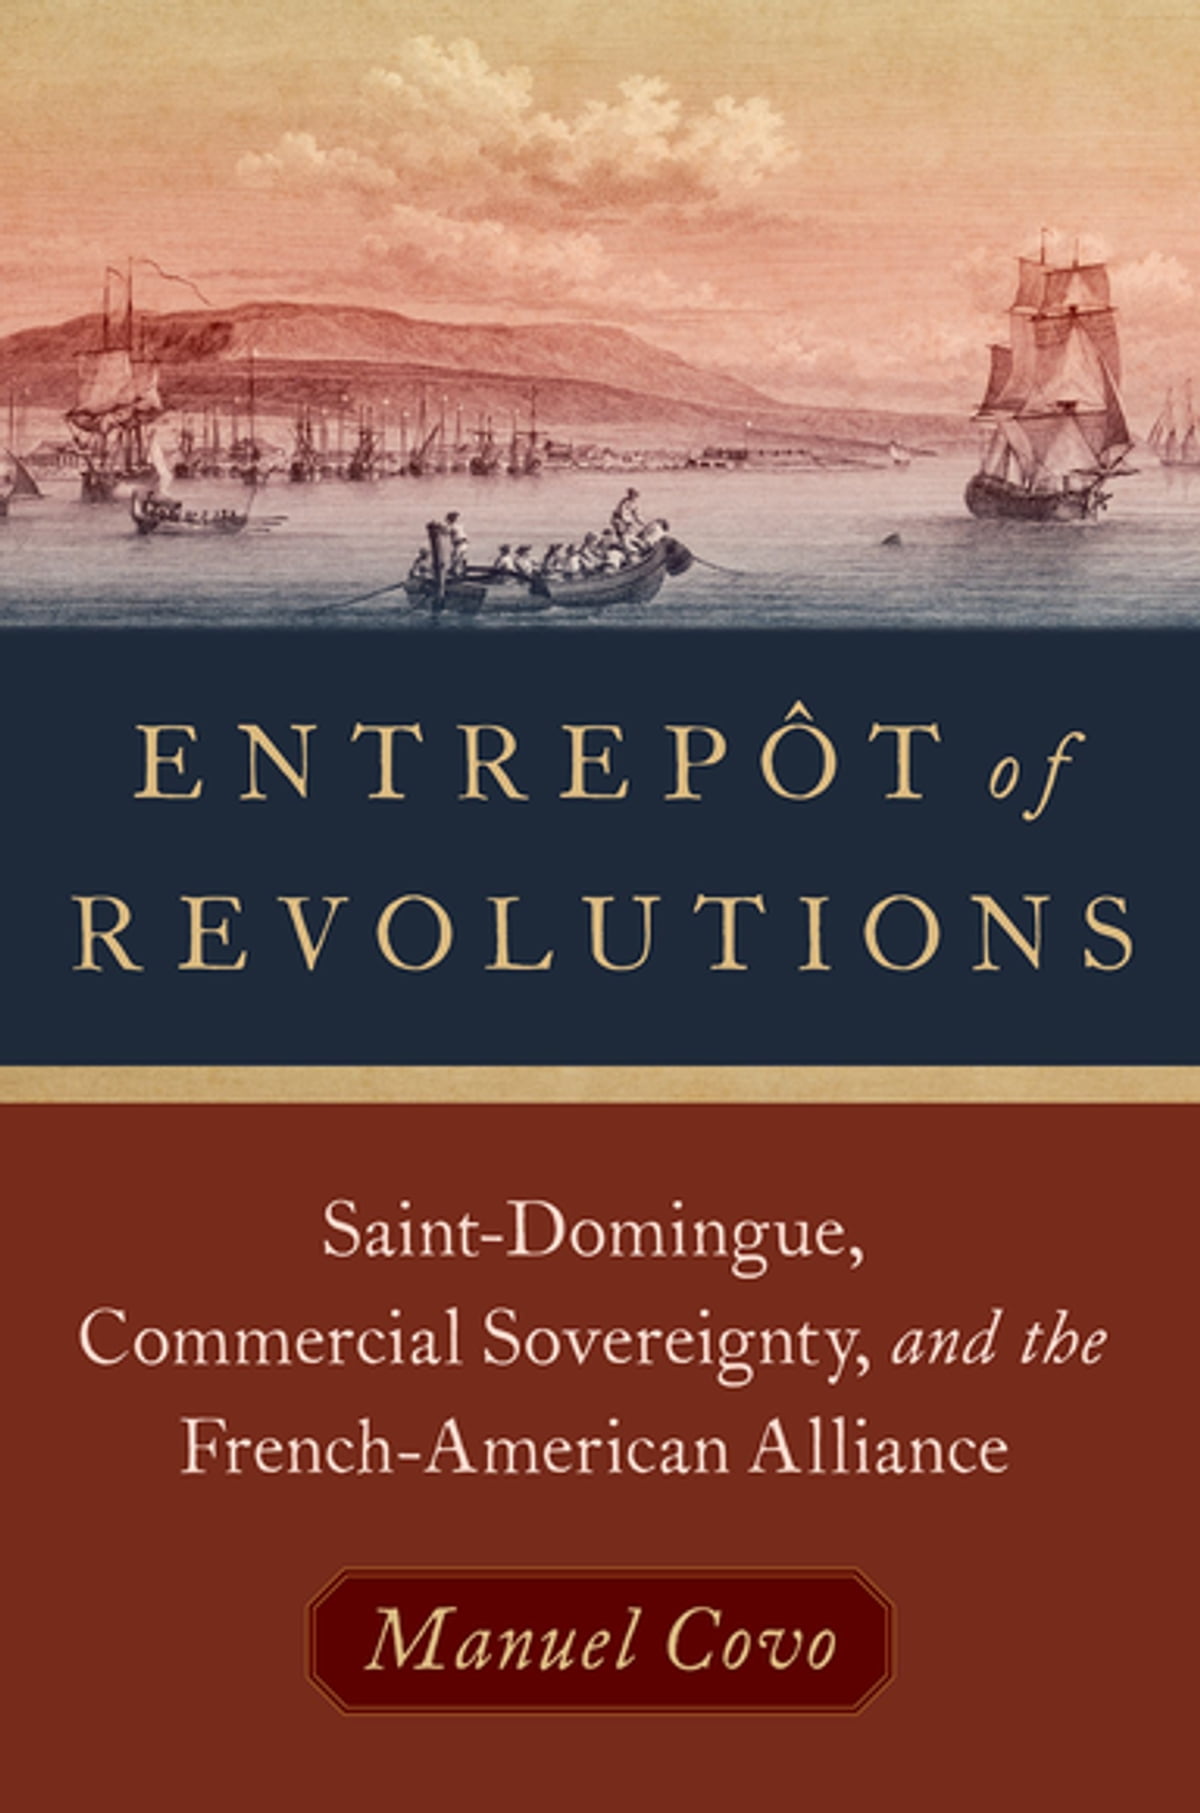 Book cover for "Entrepôt of Revolutions" by Manuel Covo